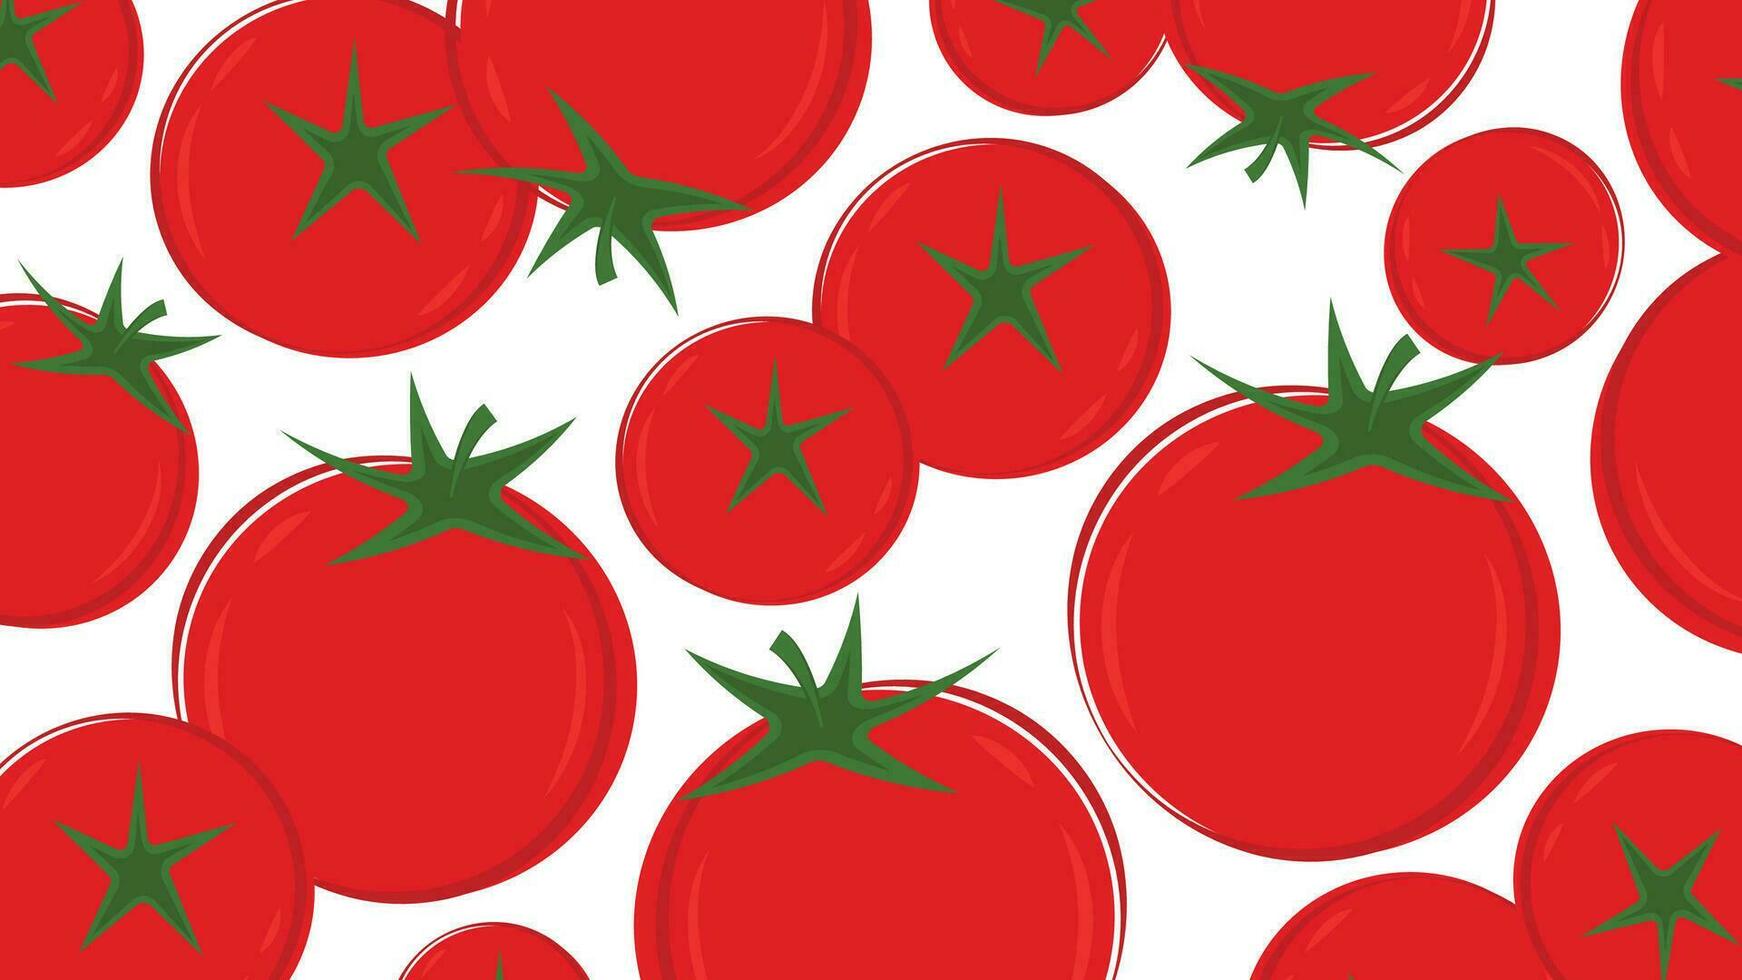 Tomato on white background. Vector illustration of fresh tomato.